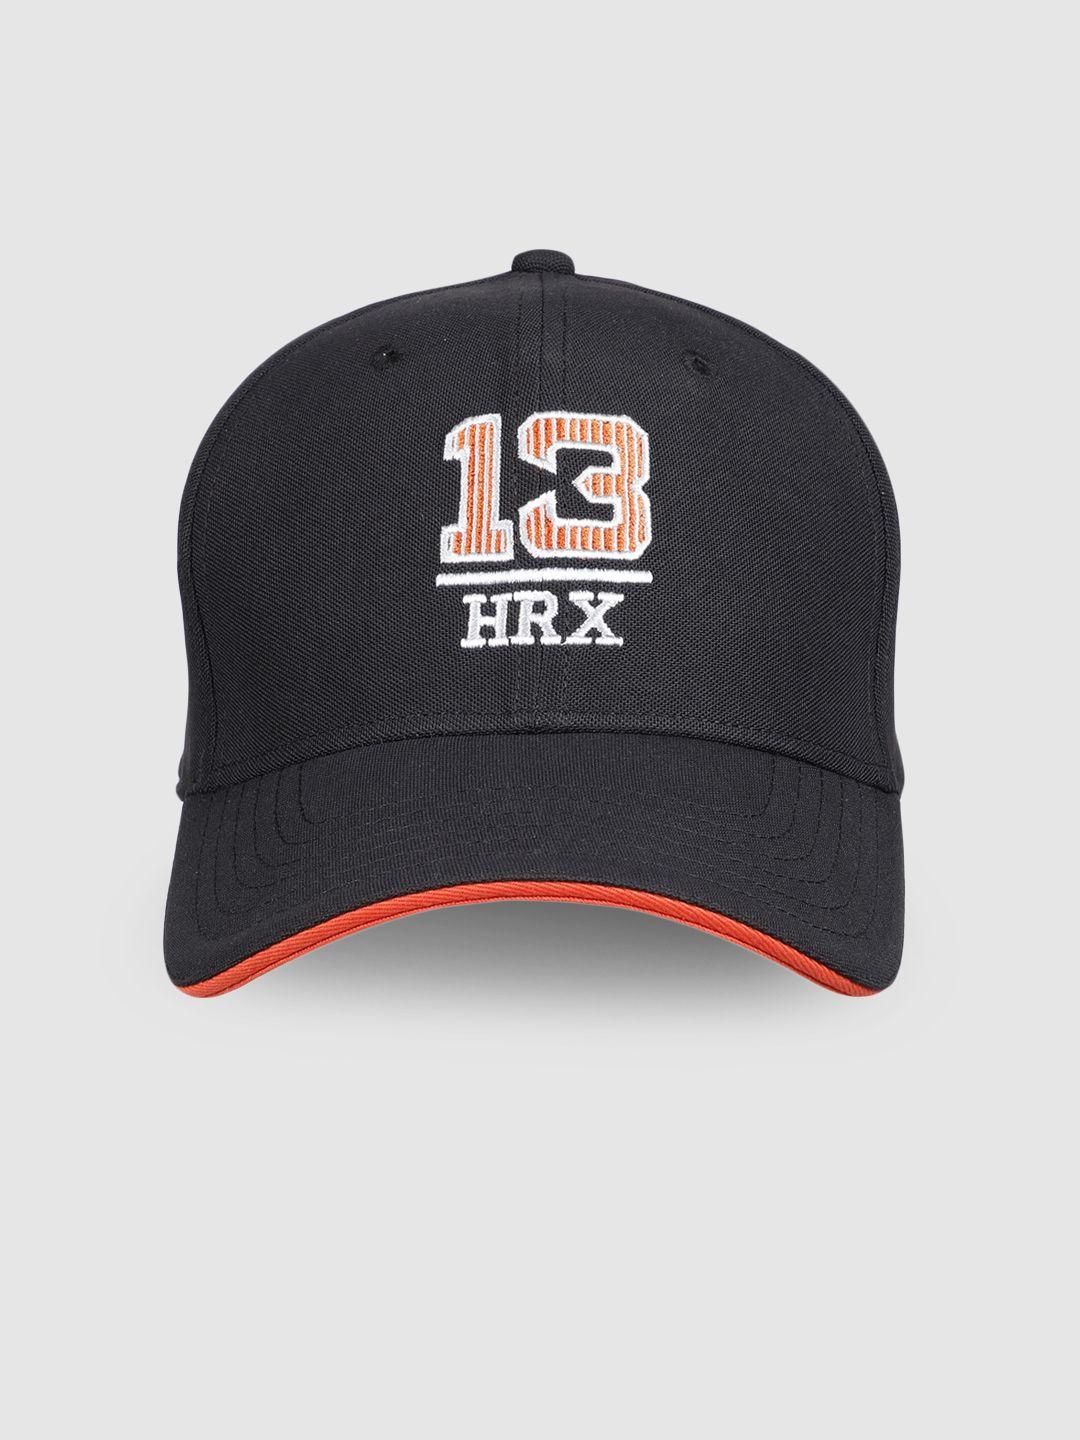 hrx by hrithik roshan unisex black baseball cap